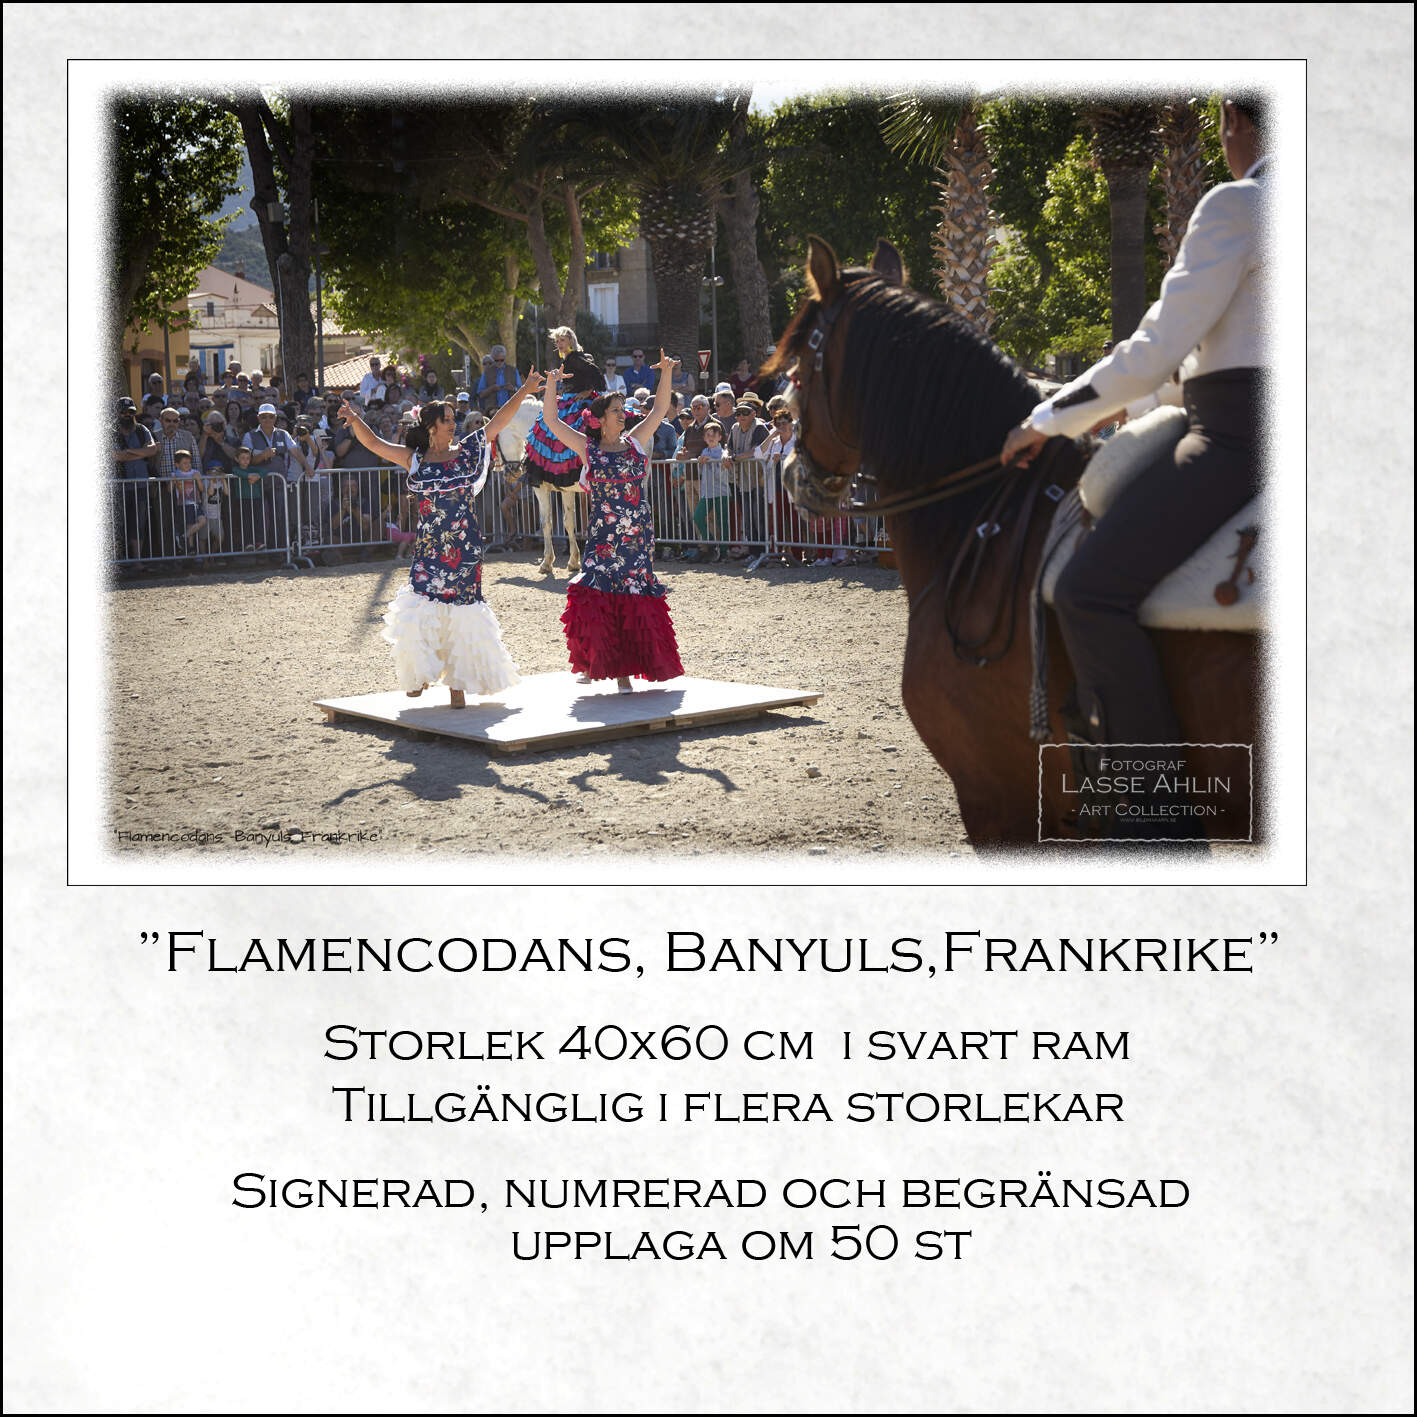 Flamencodans, Banyuls, Frankrike